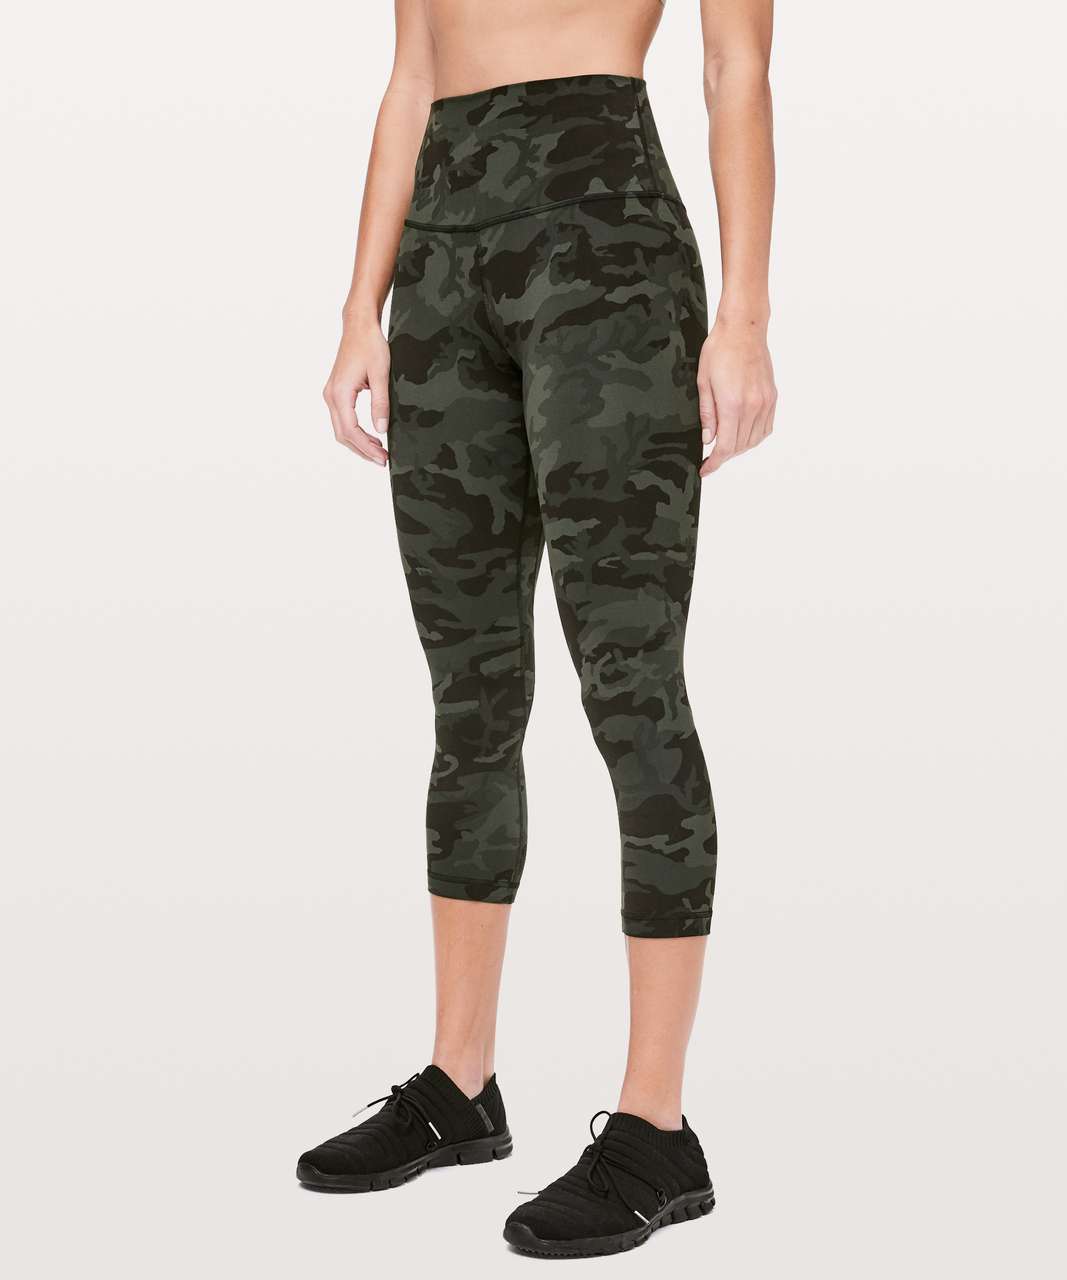 Lululemon Align Crop 21 Leggings Camouflage Camo Print 8 Activewear  Workout - $60 - From A Joyful